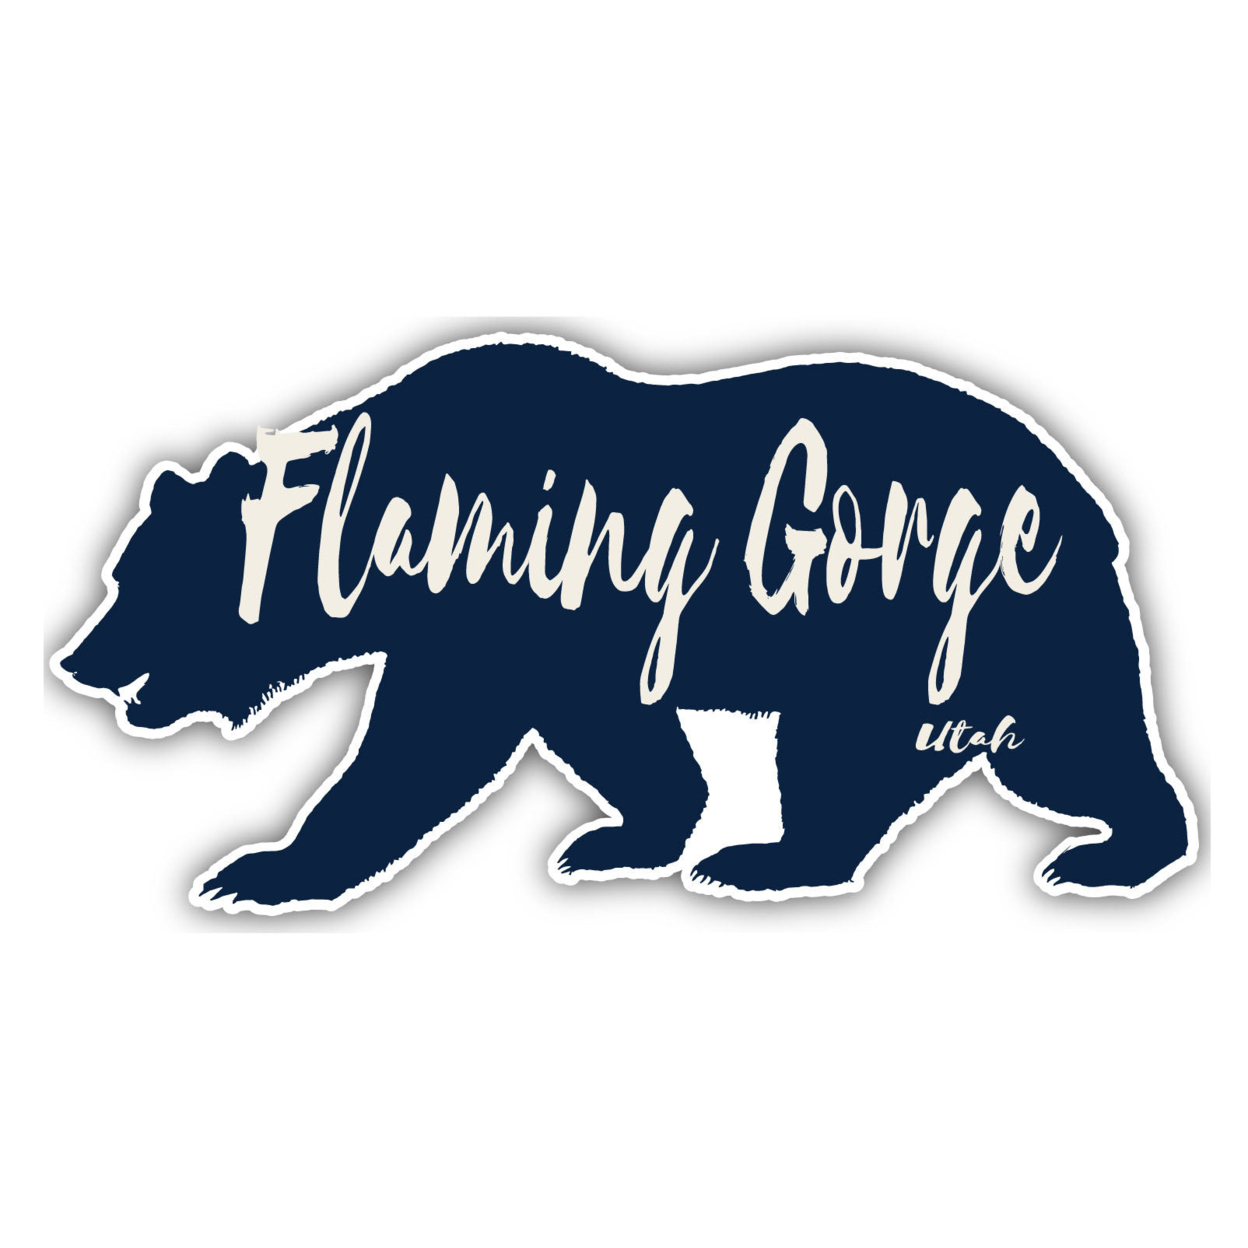 Flaming Gorge Utah Souvenir Decorative Stickers (Choose Theme And Size) - Single Unit, 12-Inch, Bear